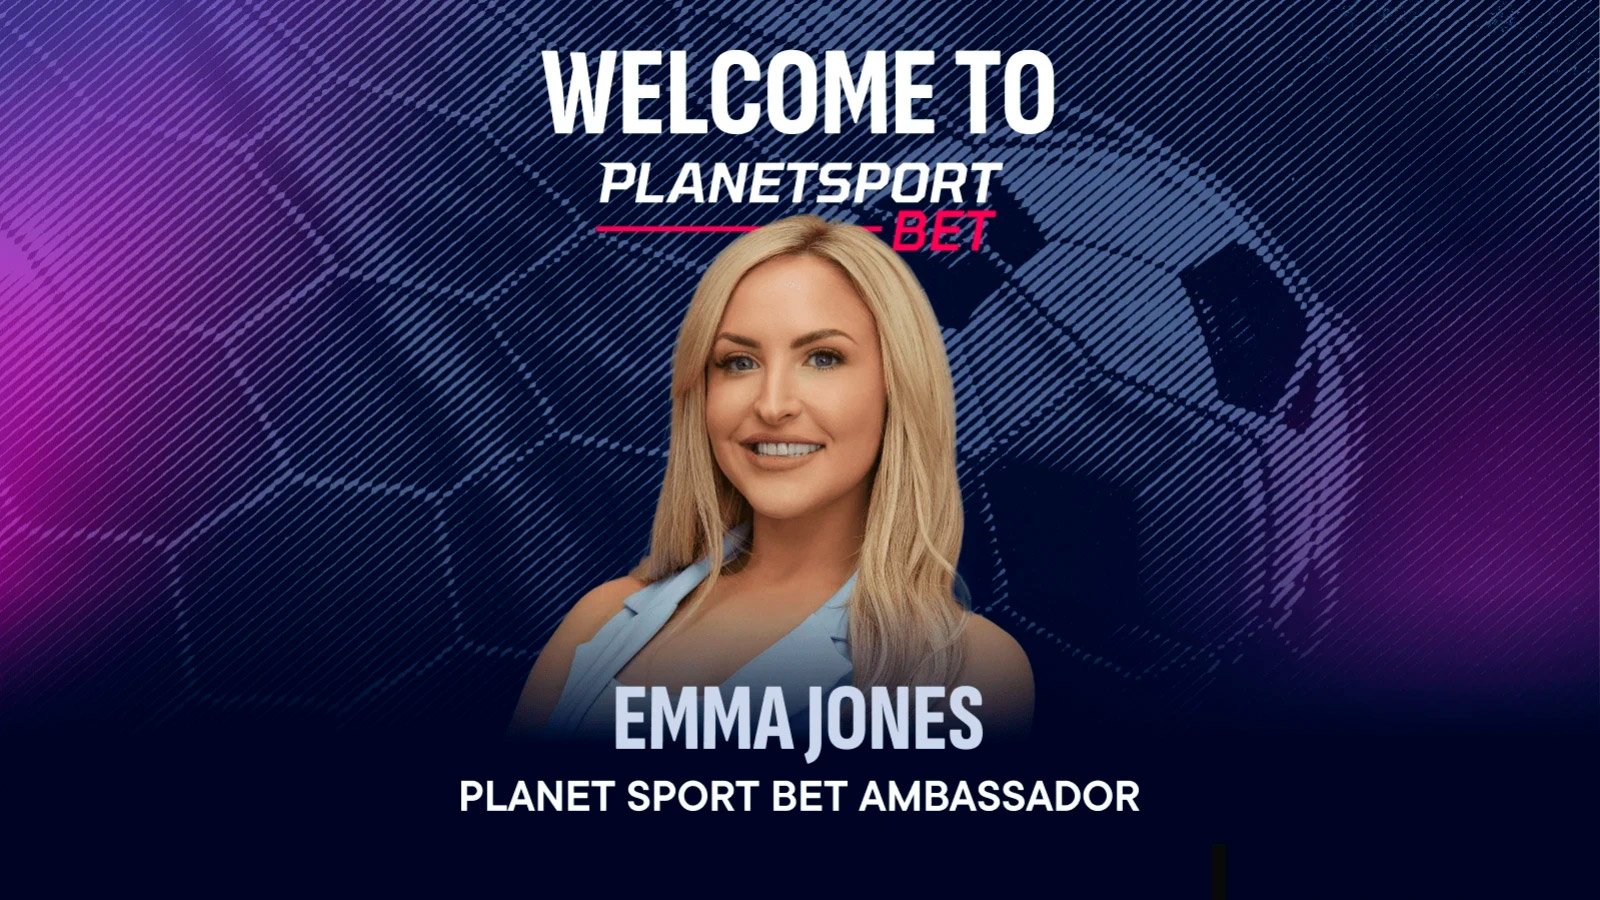 Planet Sport Bet appoints TV presenter Emma Jones as its new brand ambassador